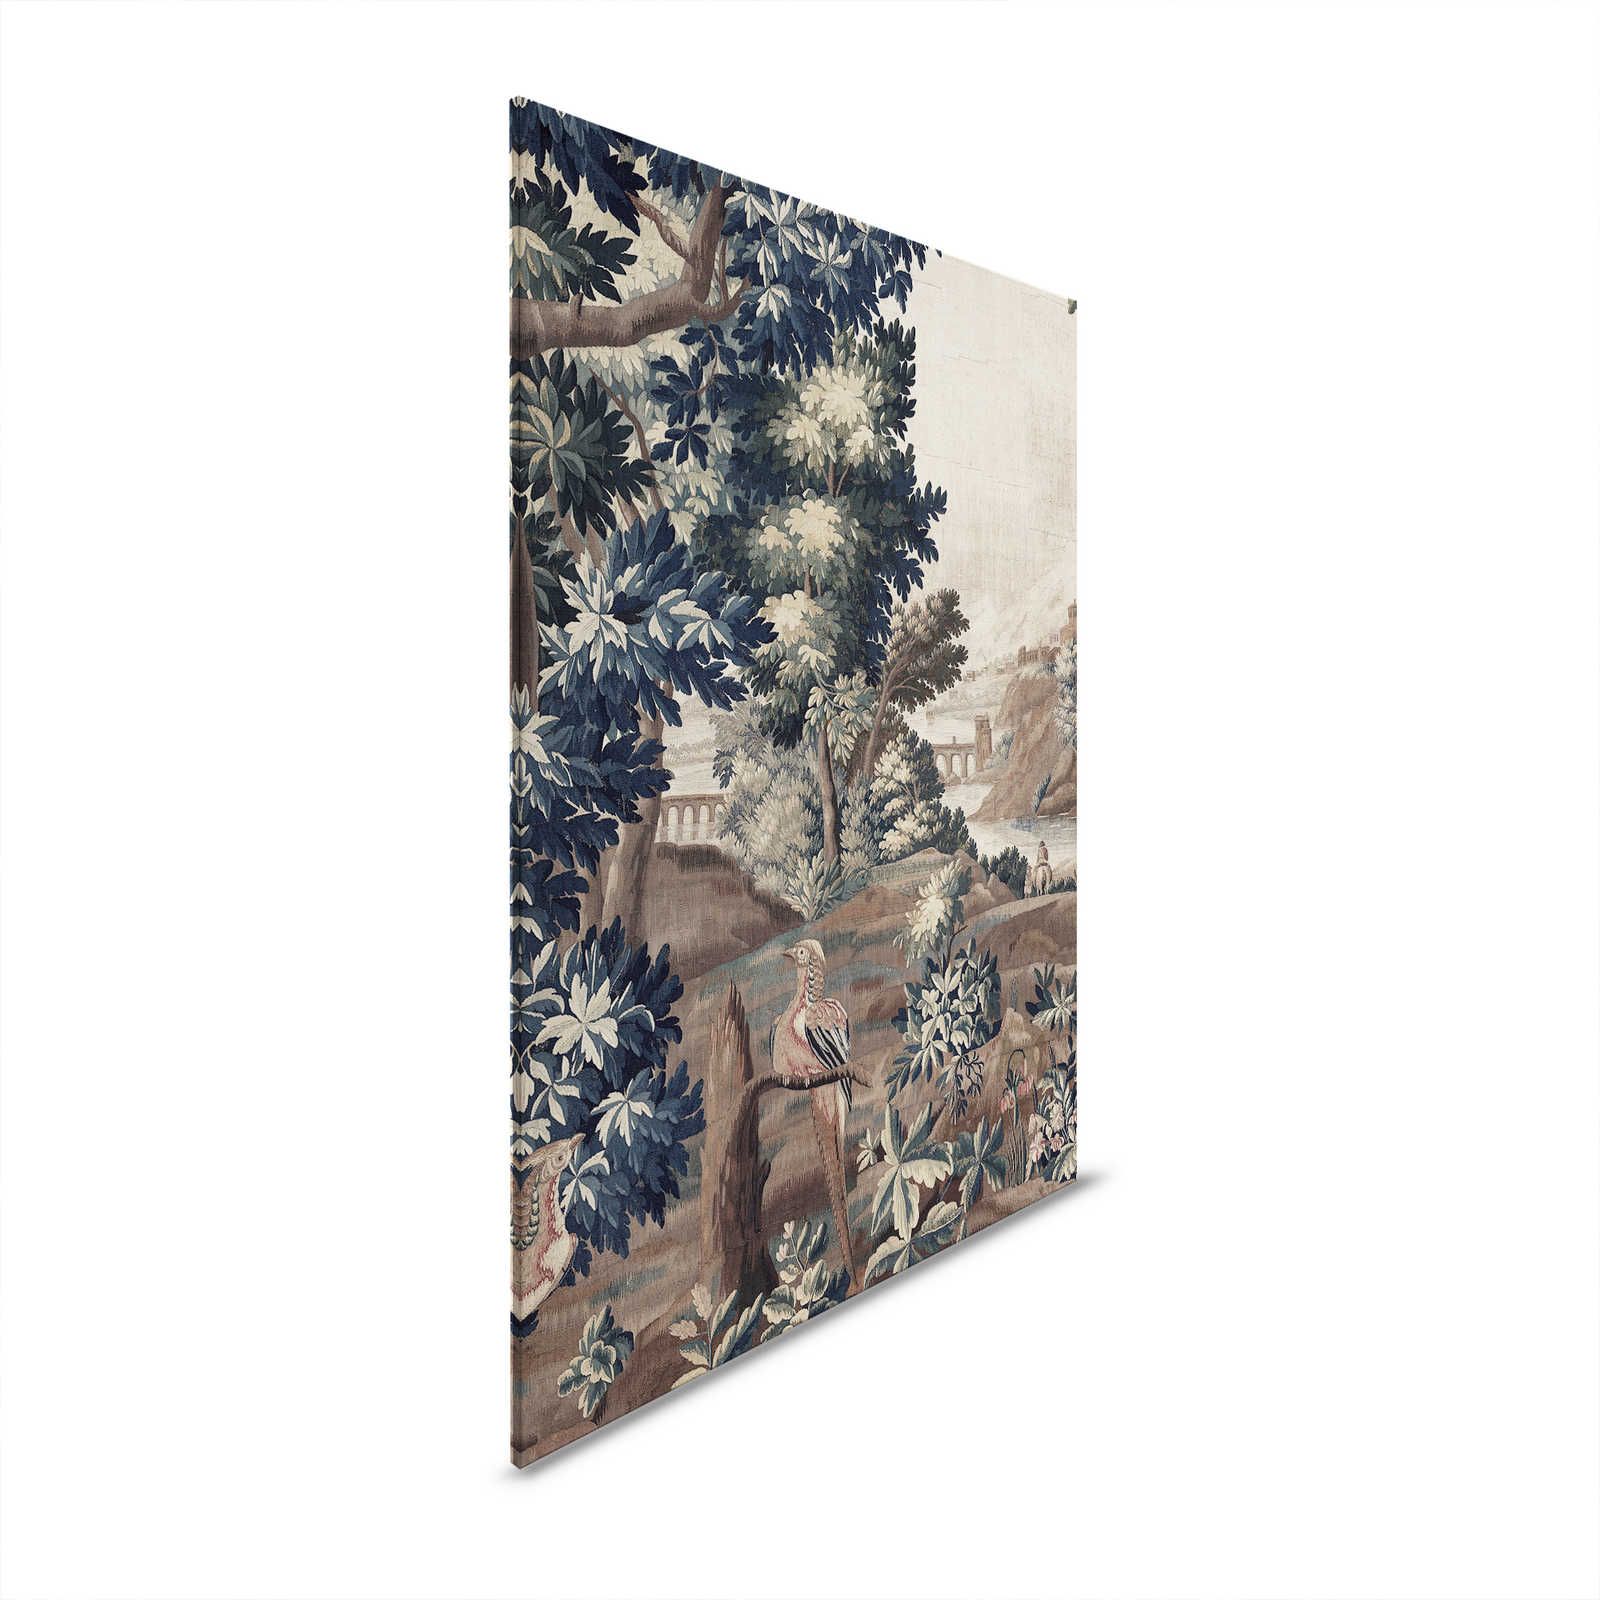 Gobelin Gallery 2 - Tableau tapisserie style art classique - 0,90 m x 0,60 m
